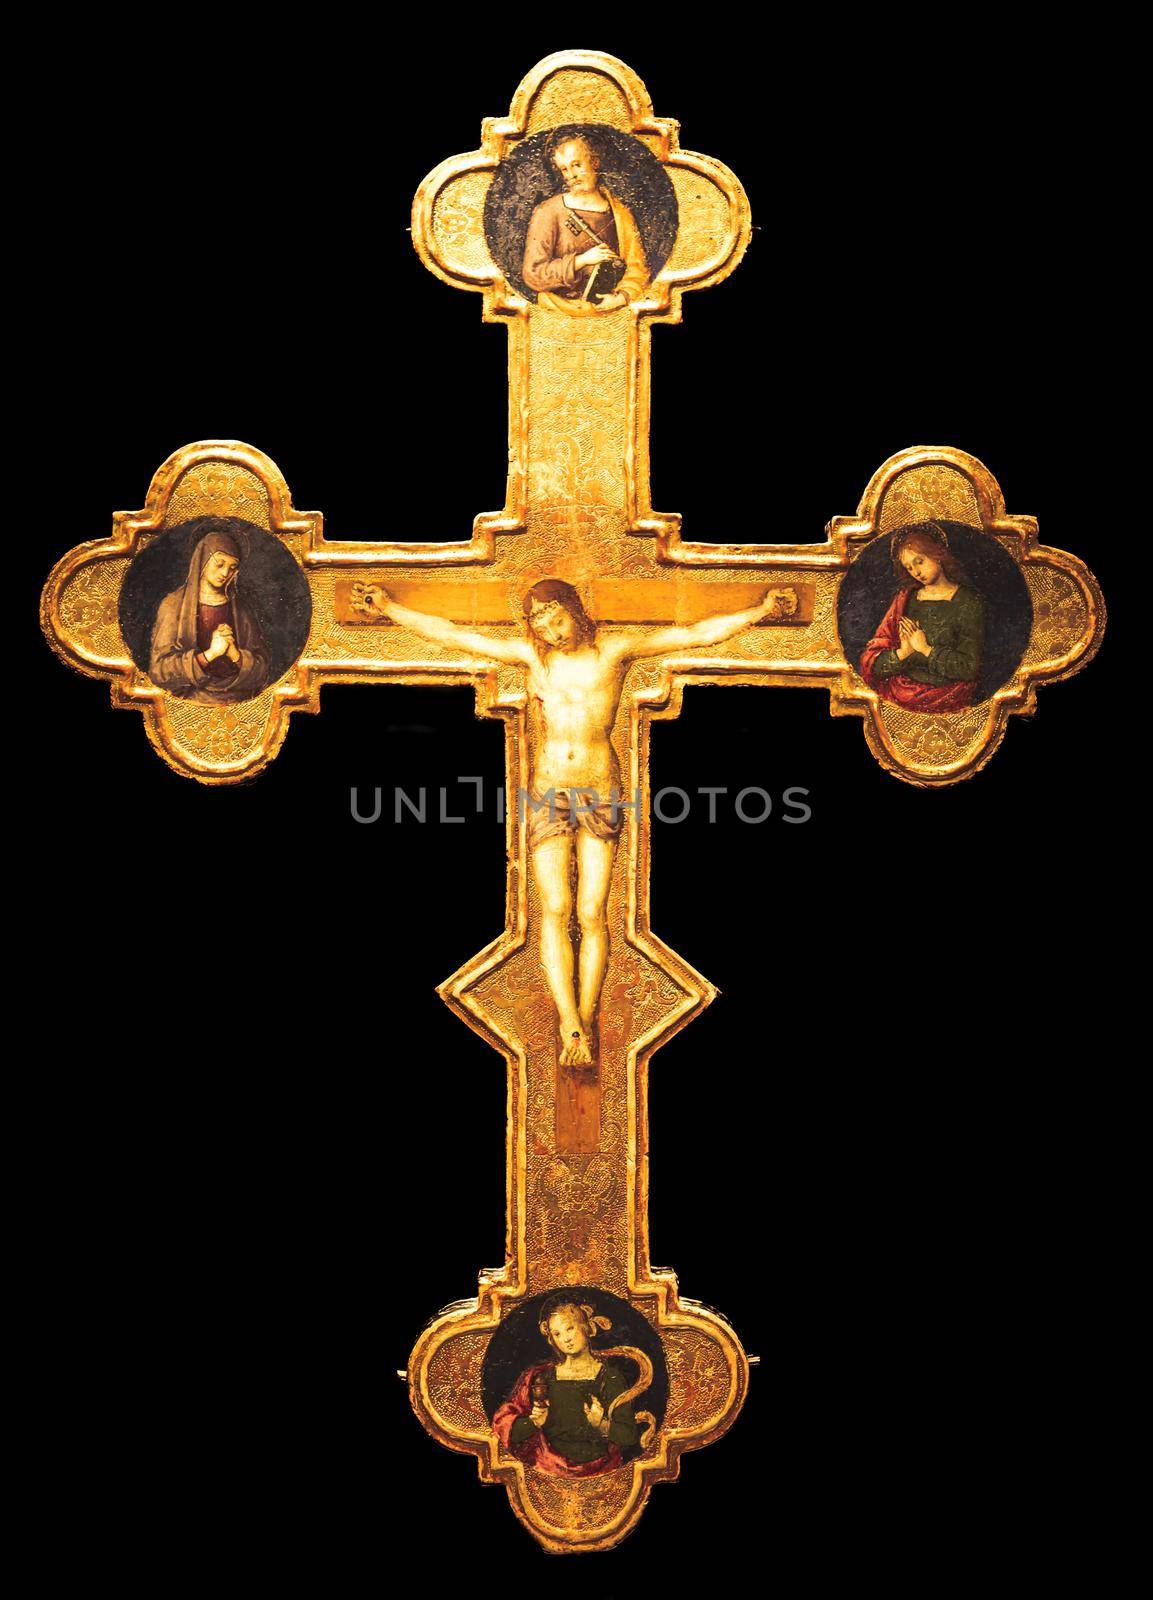 Antique crucifix made of gold - Roman Catholic Church, Jesus Christ. by Perseomedusa